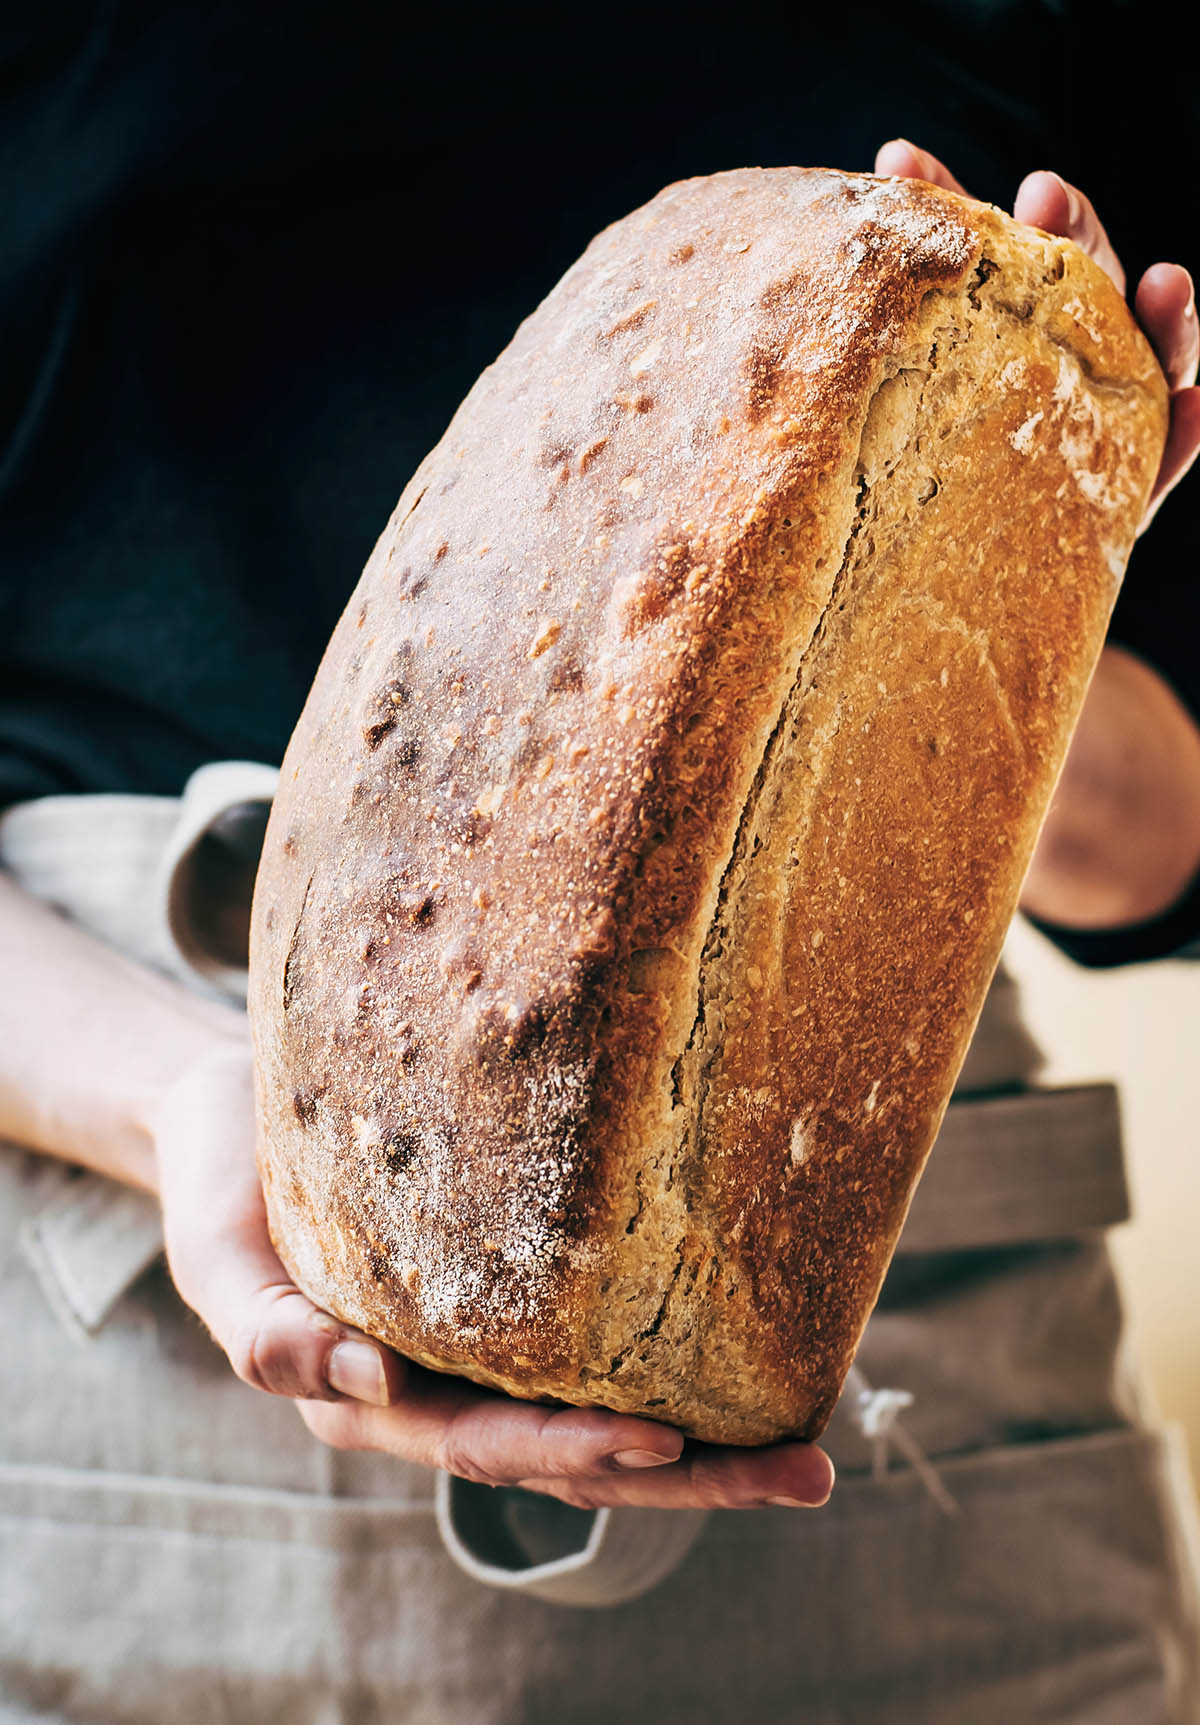 A woman's hands holding a loaf of sourdough sandwich bread.